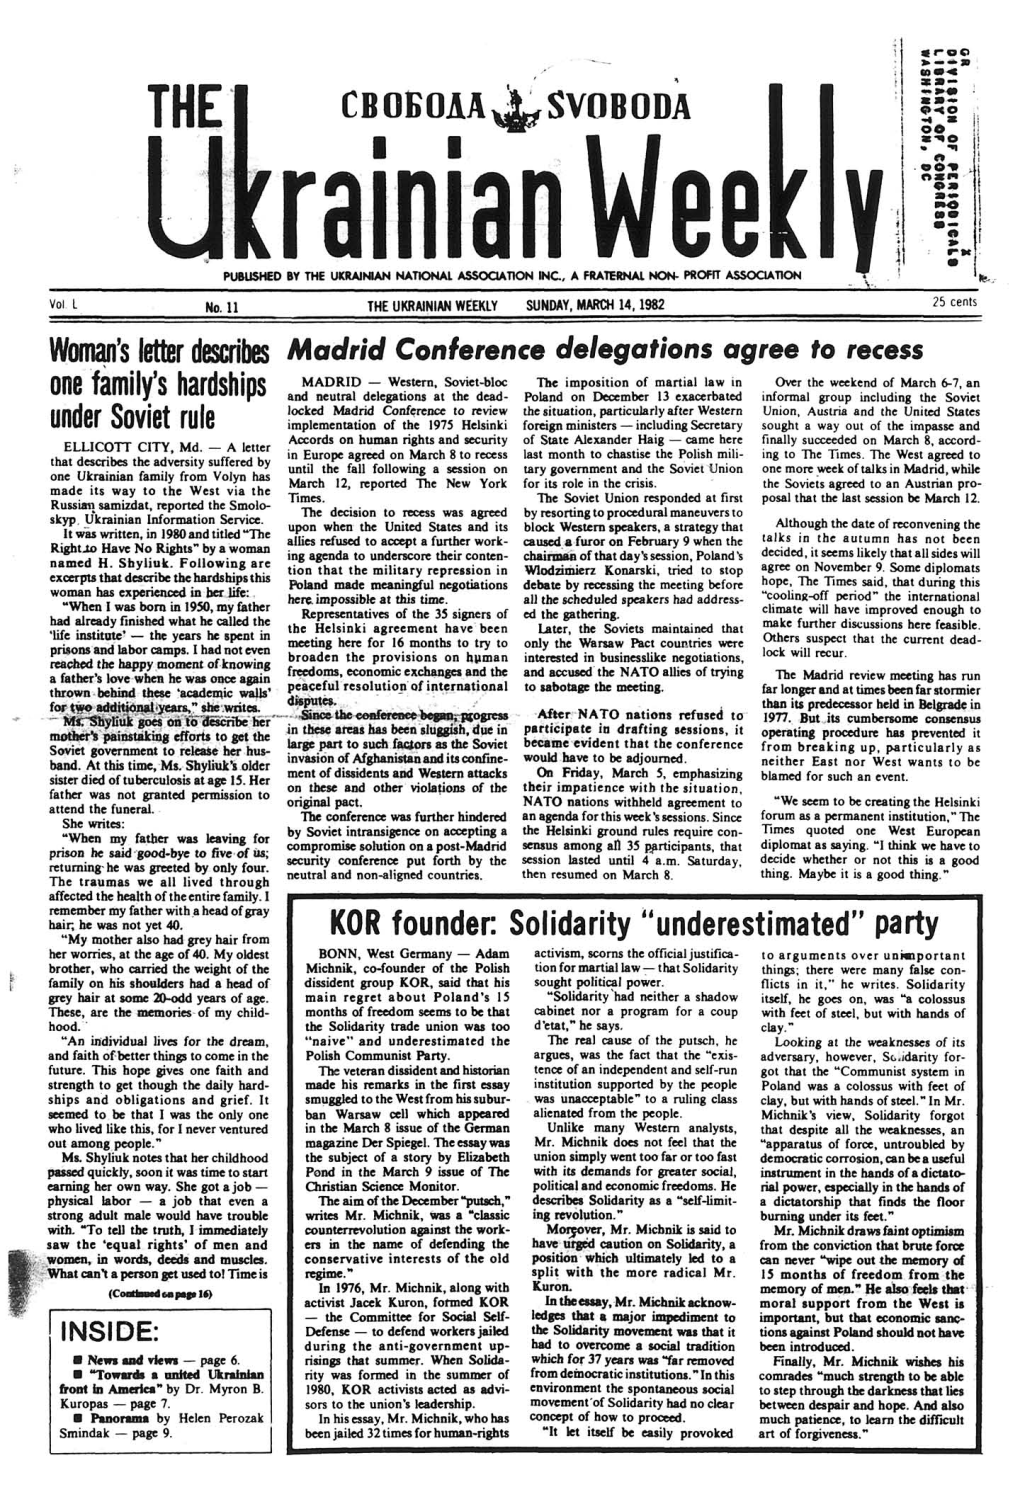 The Ukrainian Weekly 1982, No.11